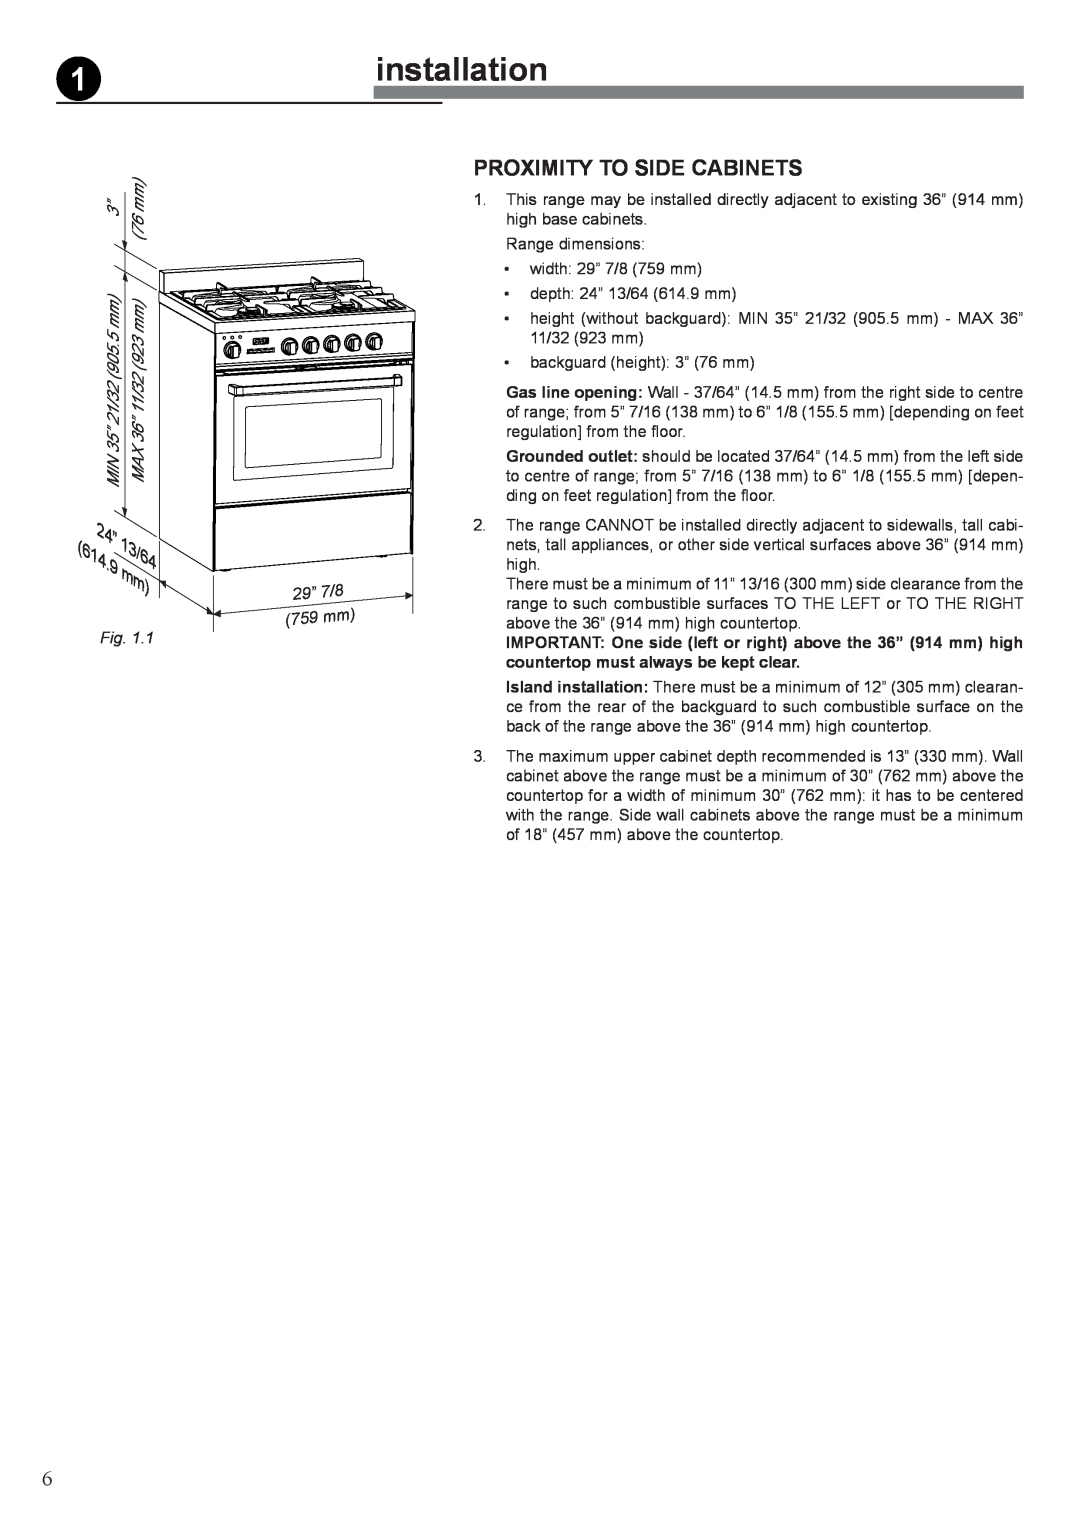 Verona VEFSGE 304 SC manual installation, Proximity To Side Cabinets, 76 mm, MIN 35” 21/32 905.5 mm, MAX 36” 11/32 923 mm 